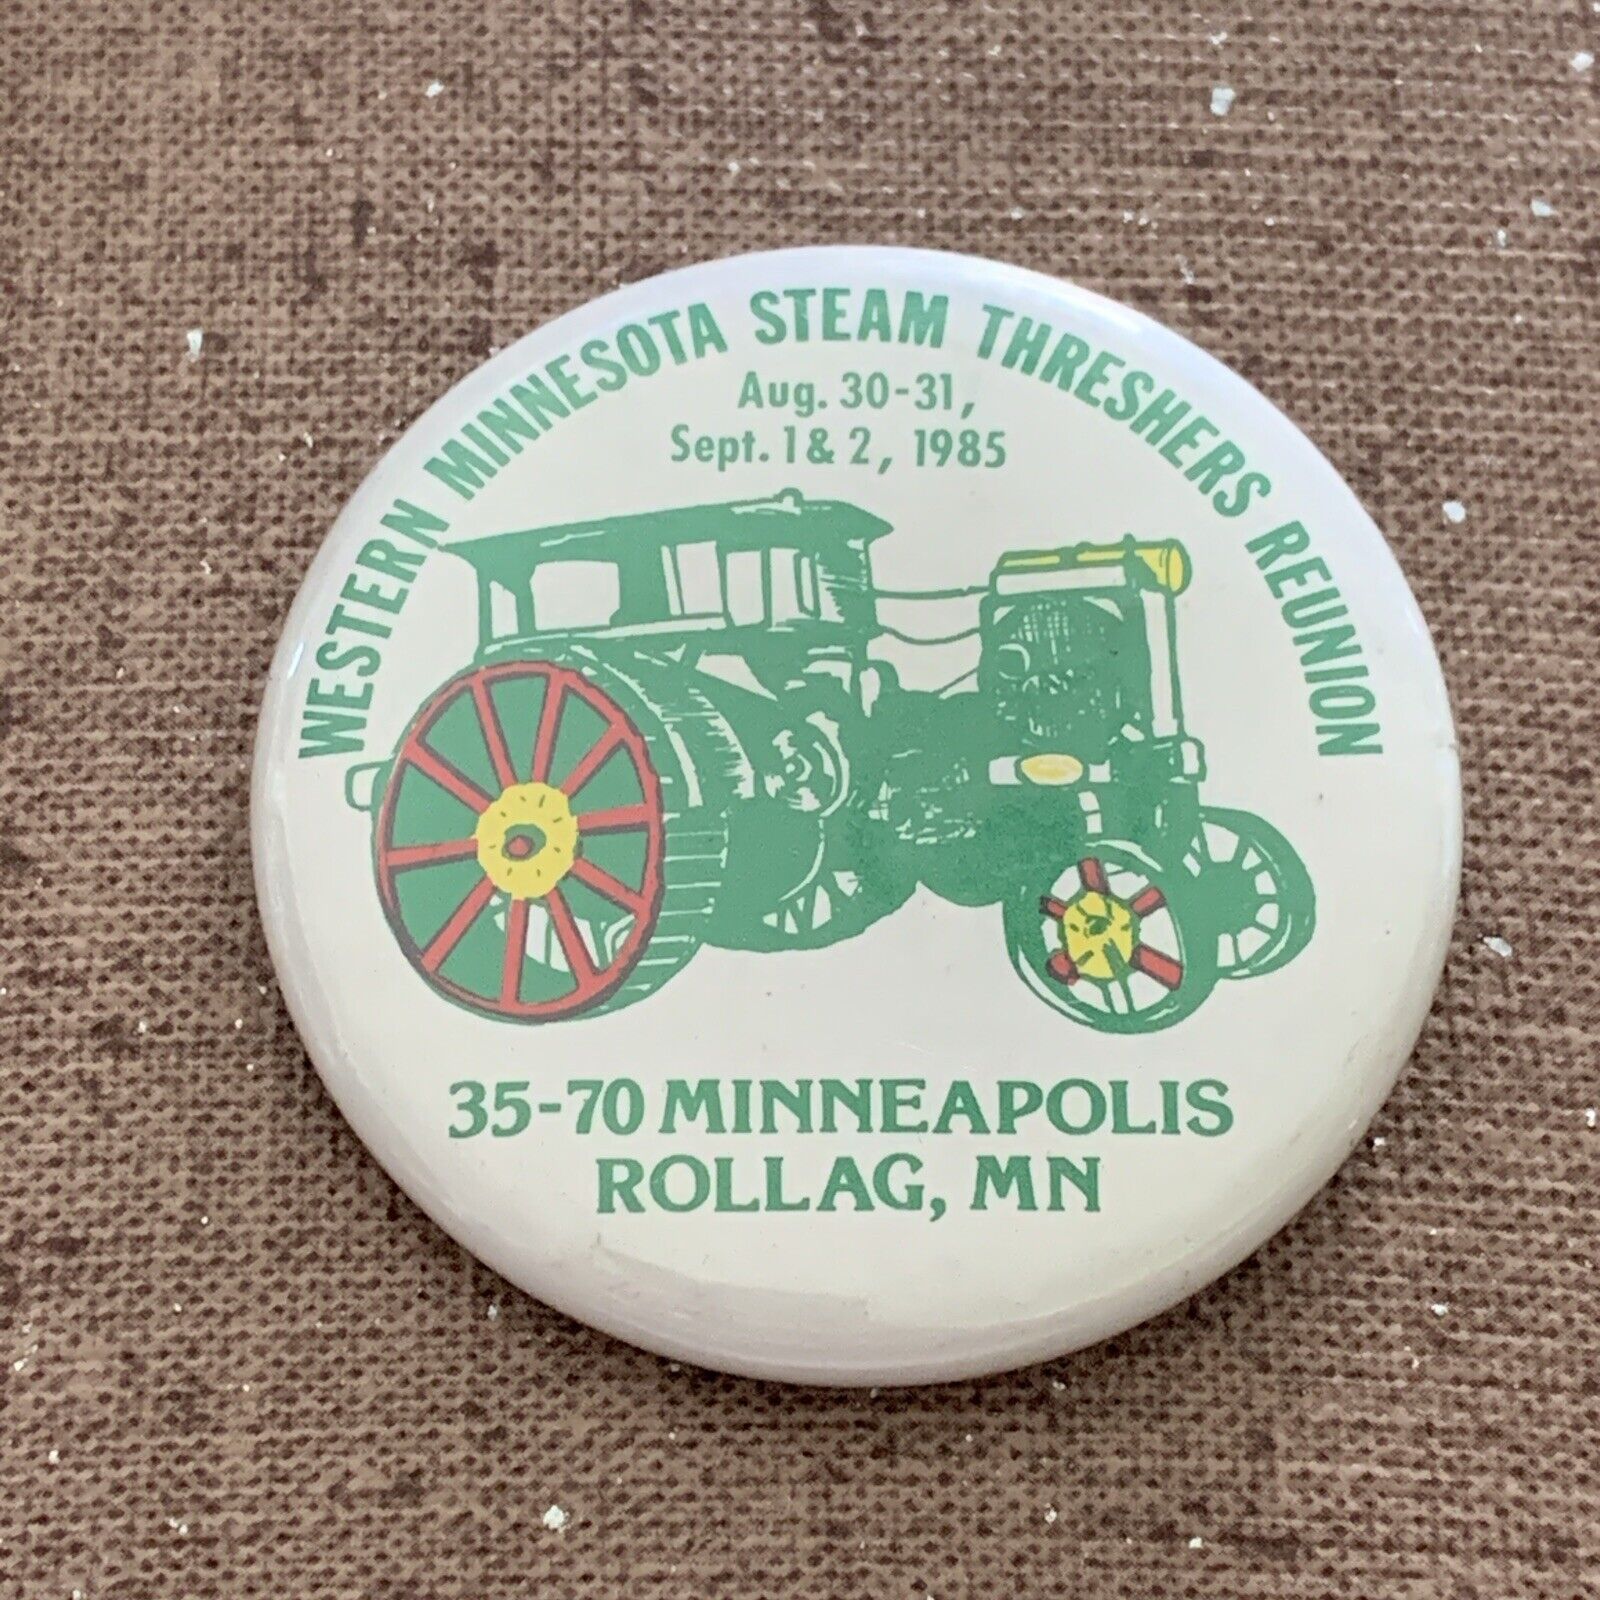 Western Minnesota Steam Threshers Reunion Pinback Rollag Minnesota 1985